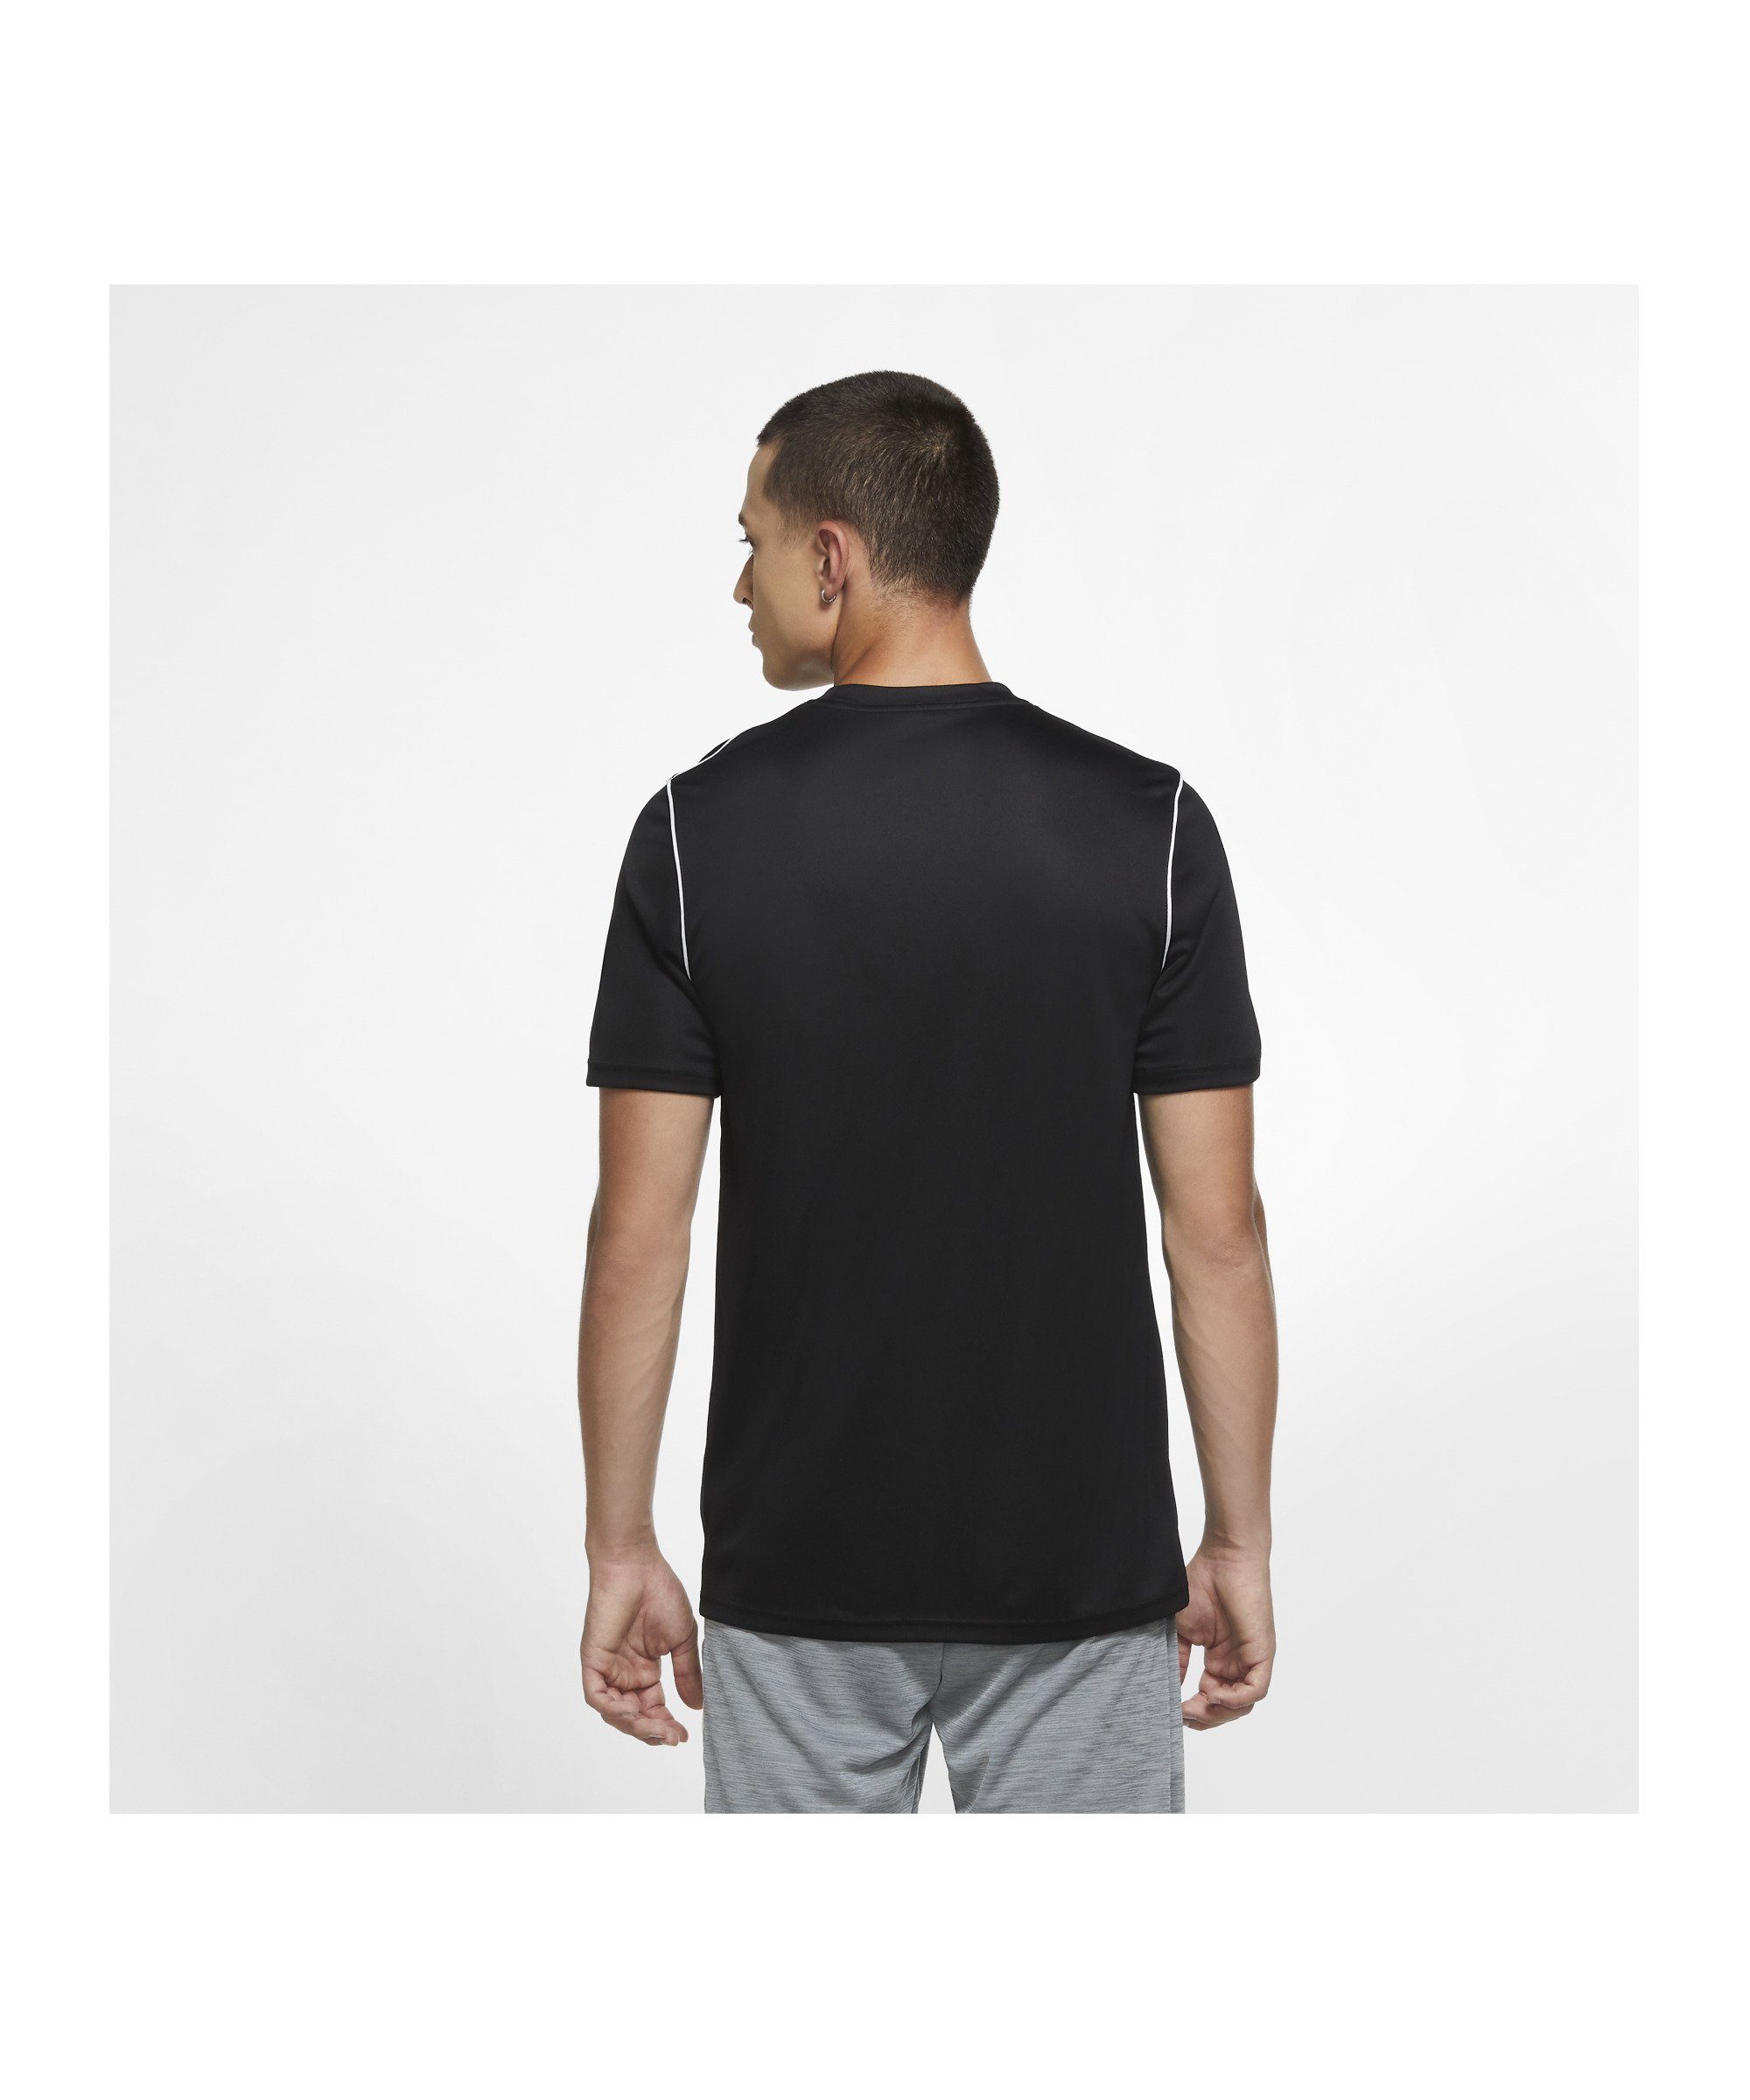 Nike T-Shirt Park default 20 Shirt Training schwarz